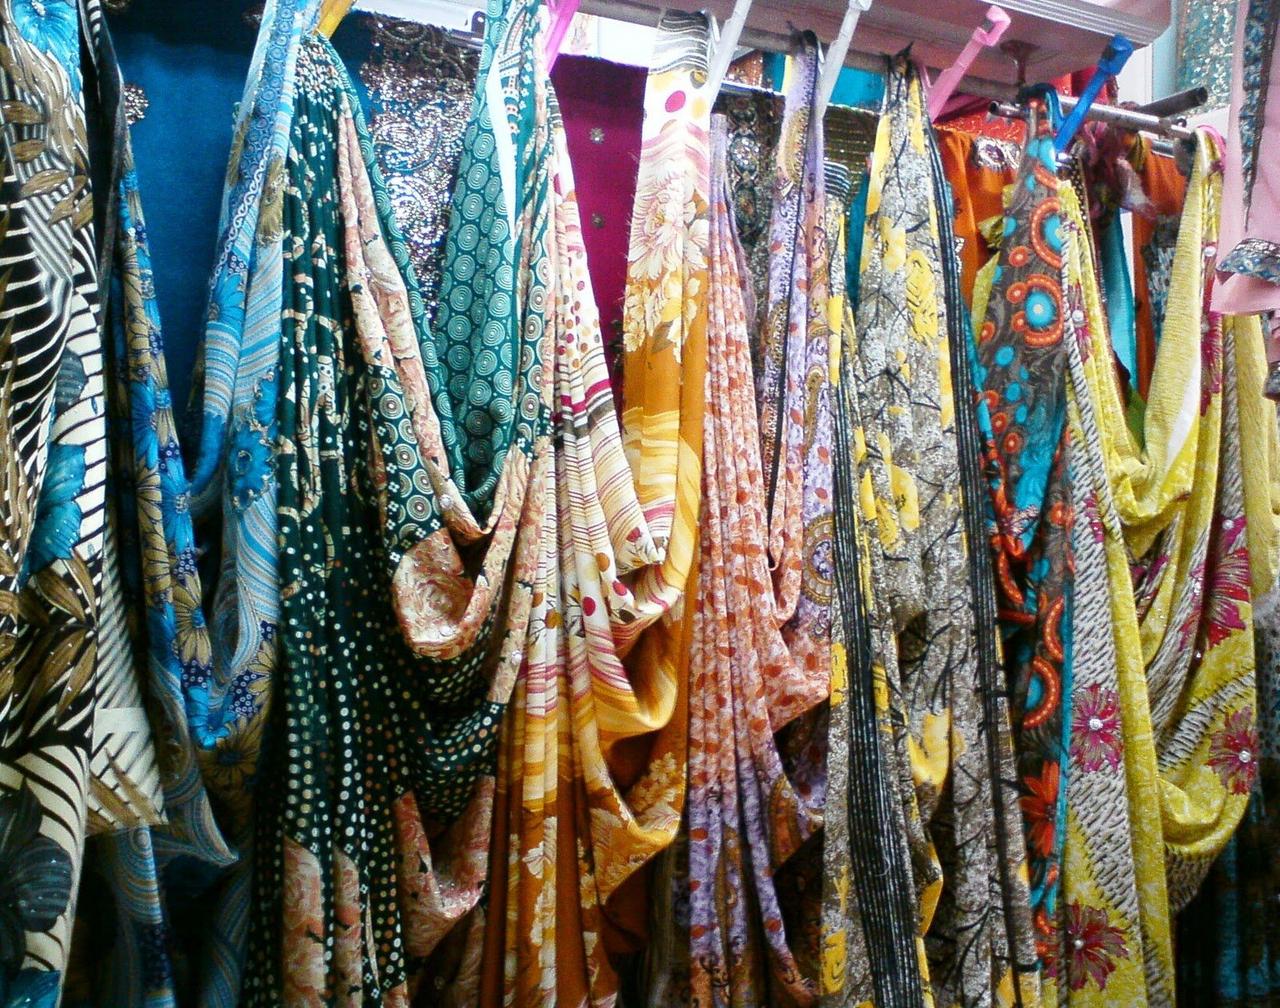 Entering from Dadar station side - Picture of Hindmata Cloth Market, Mumbai  - Tripadvisor